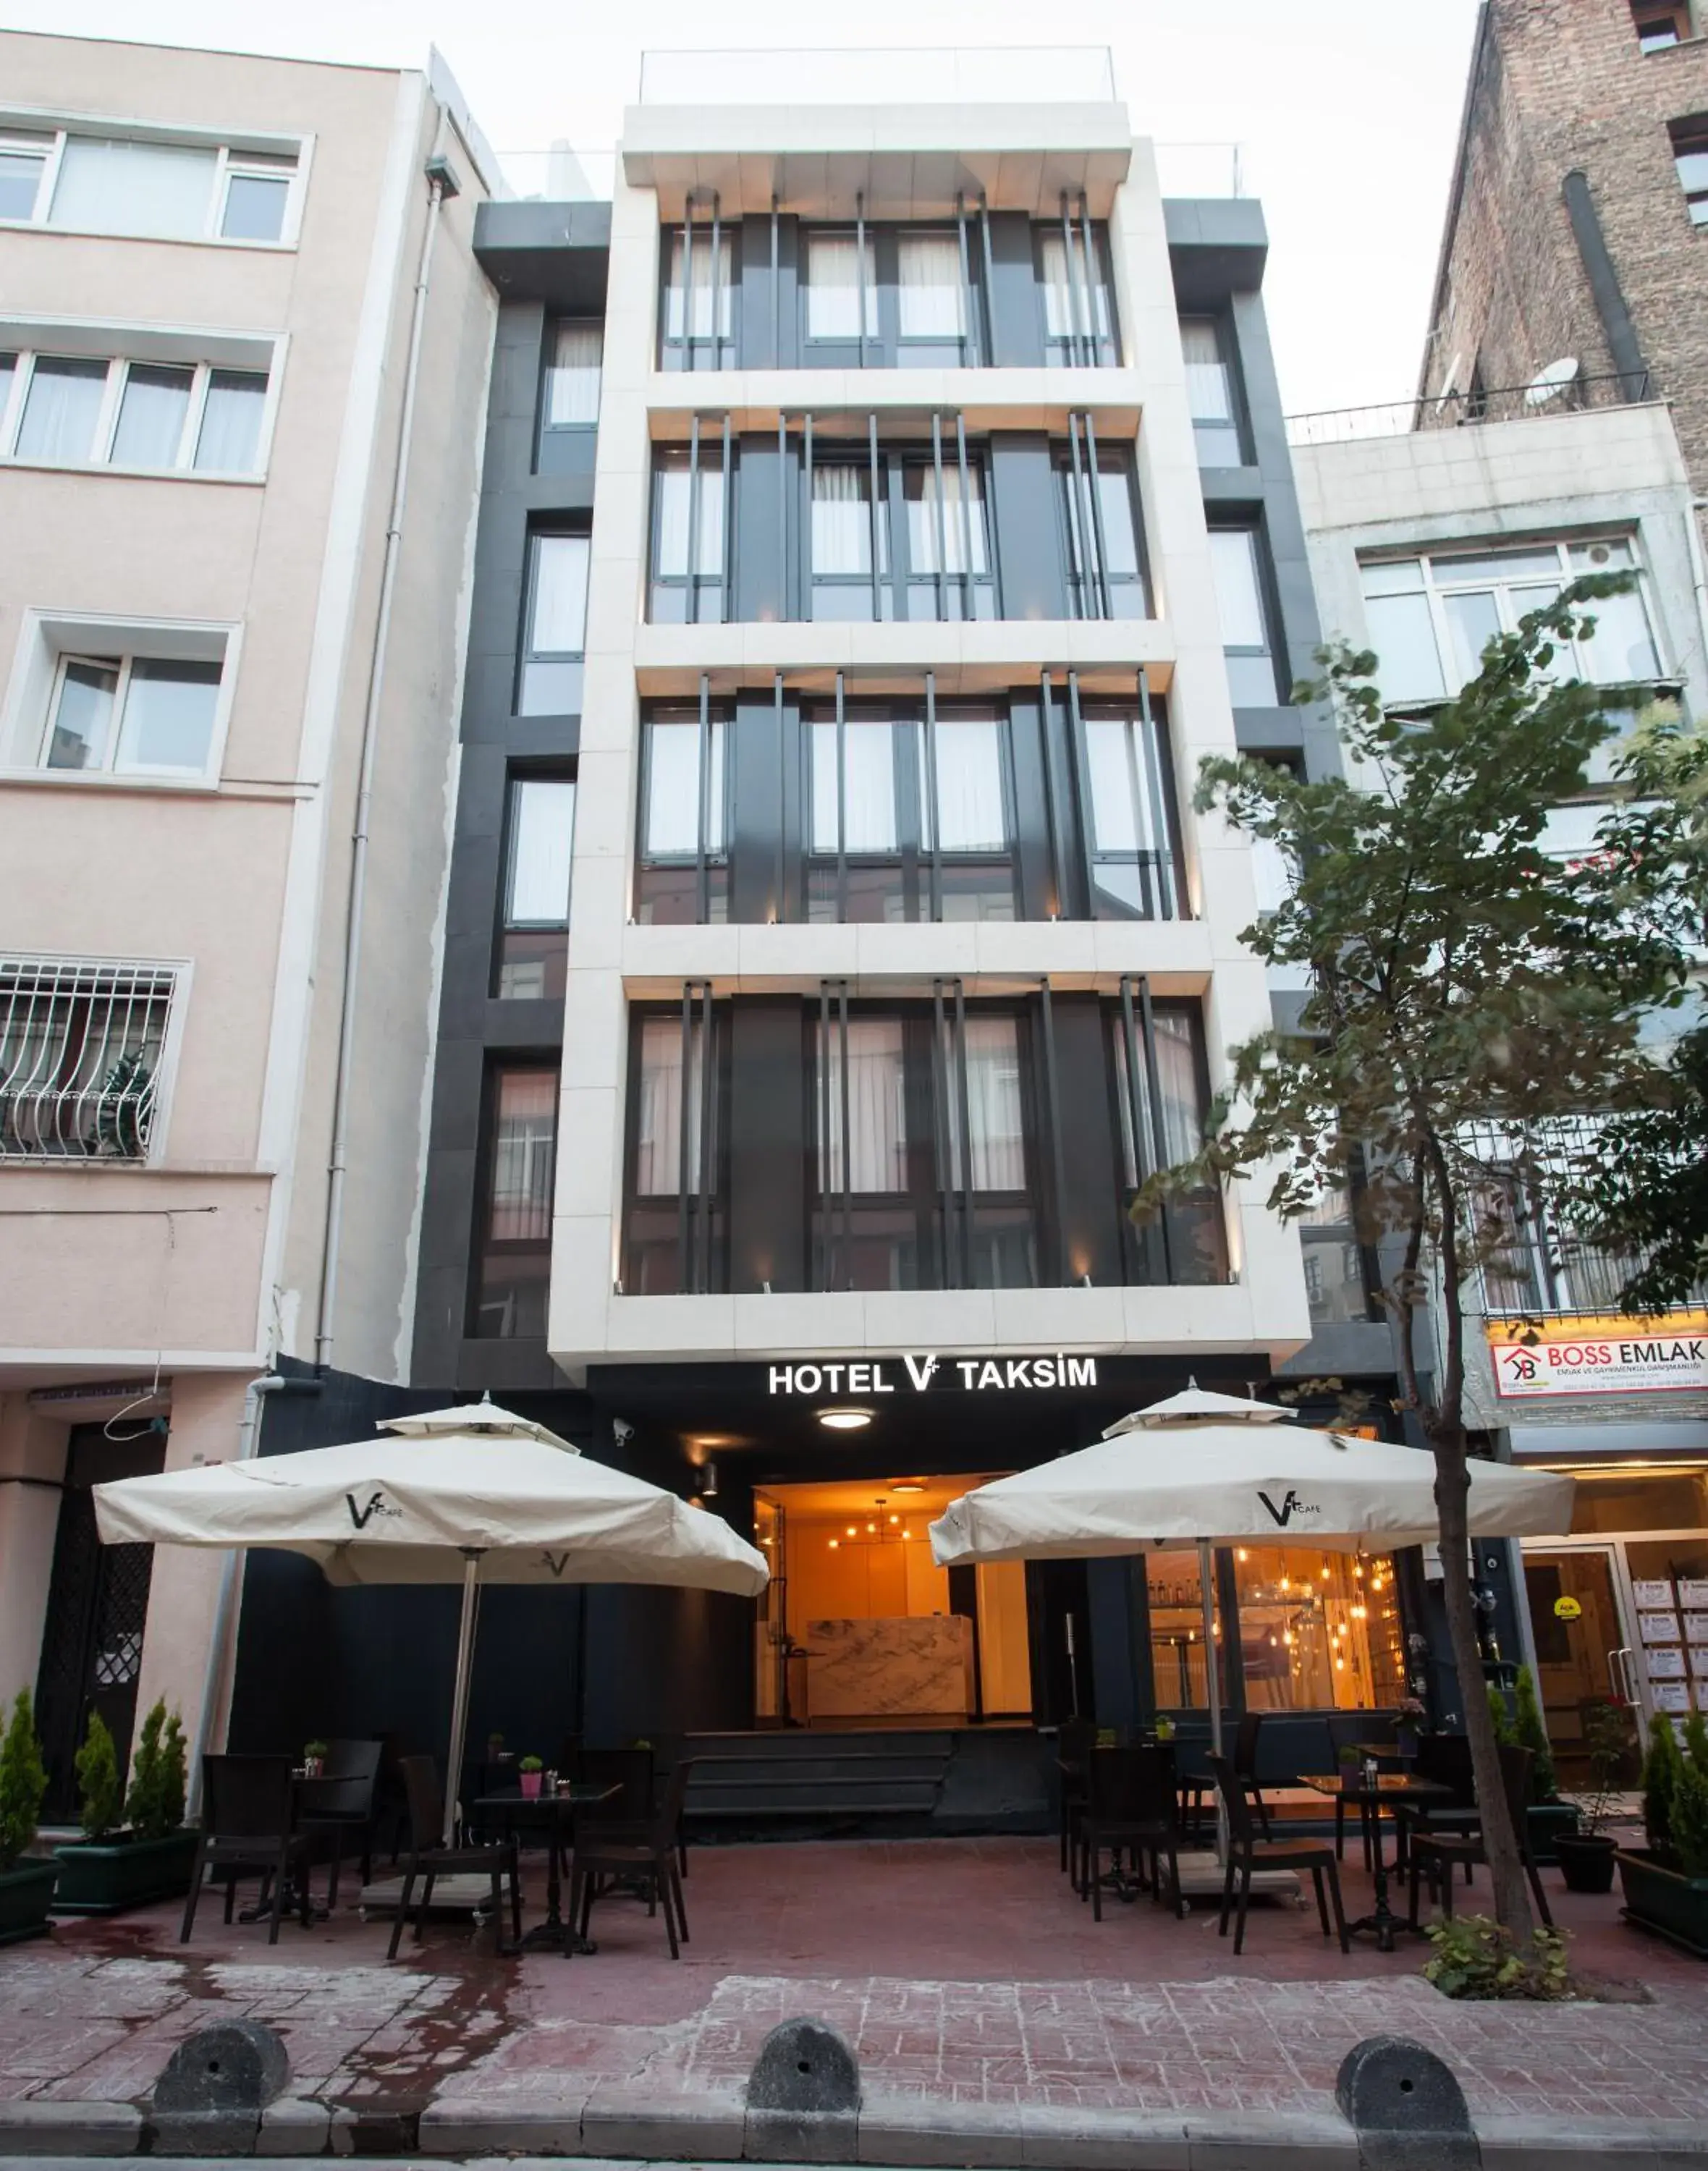 Property building, Facade/Entrance in Hotel V Plus Taksim